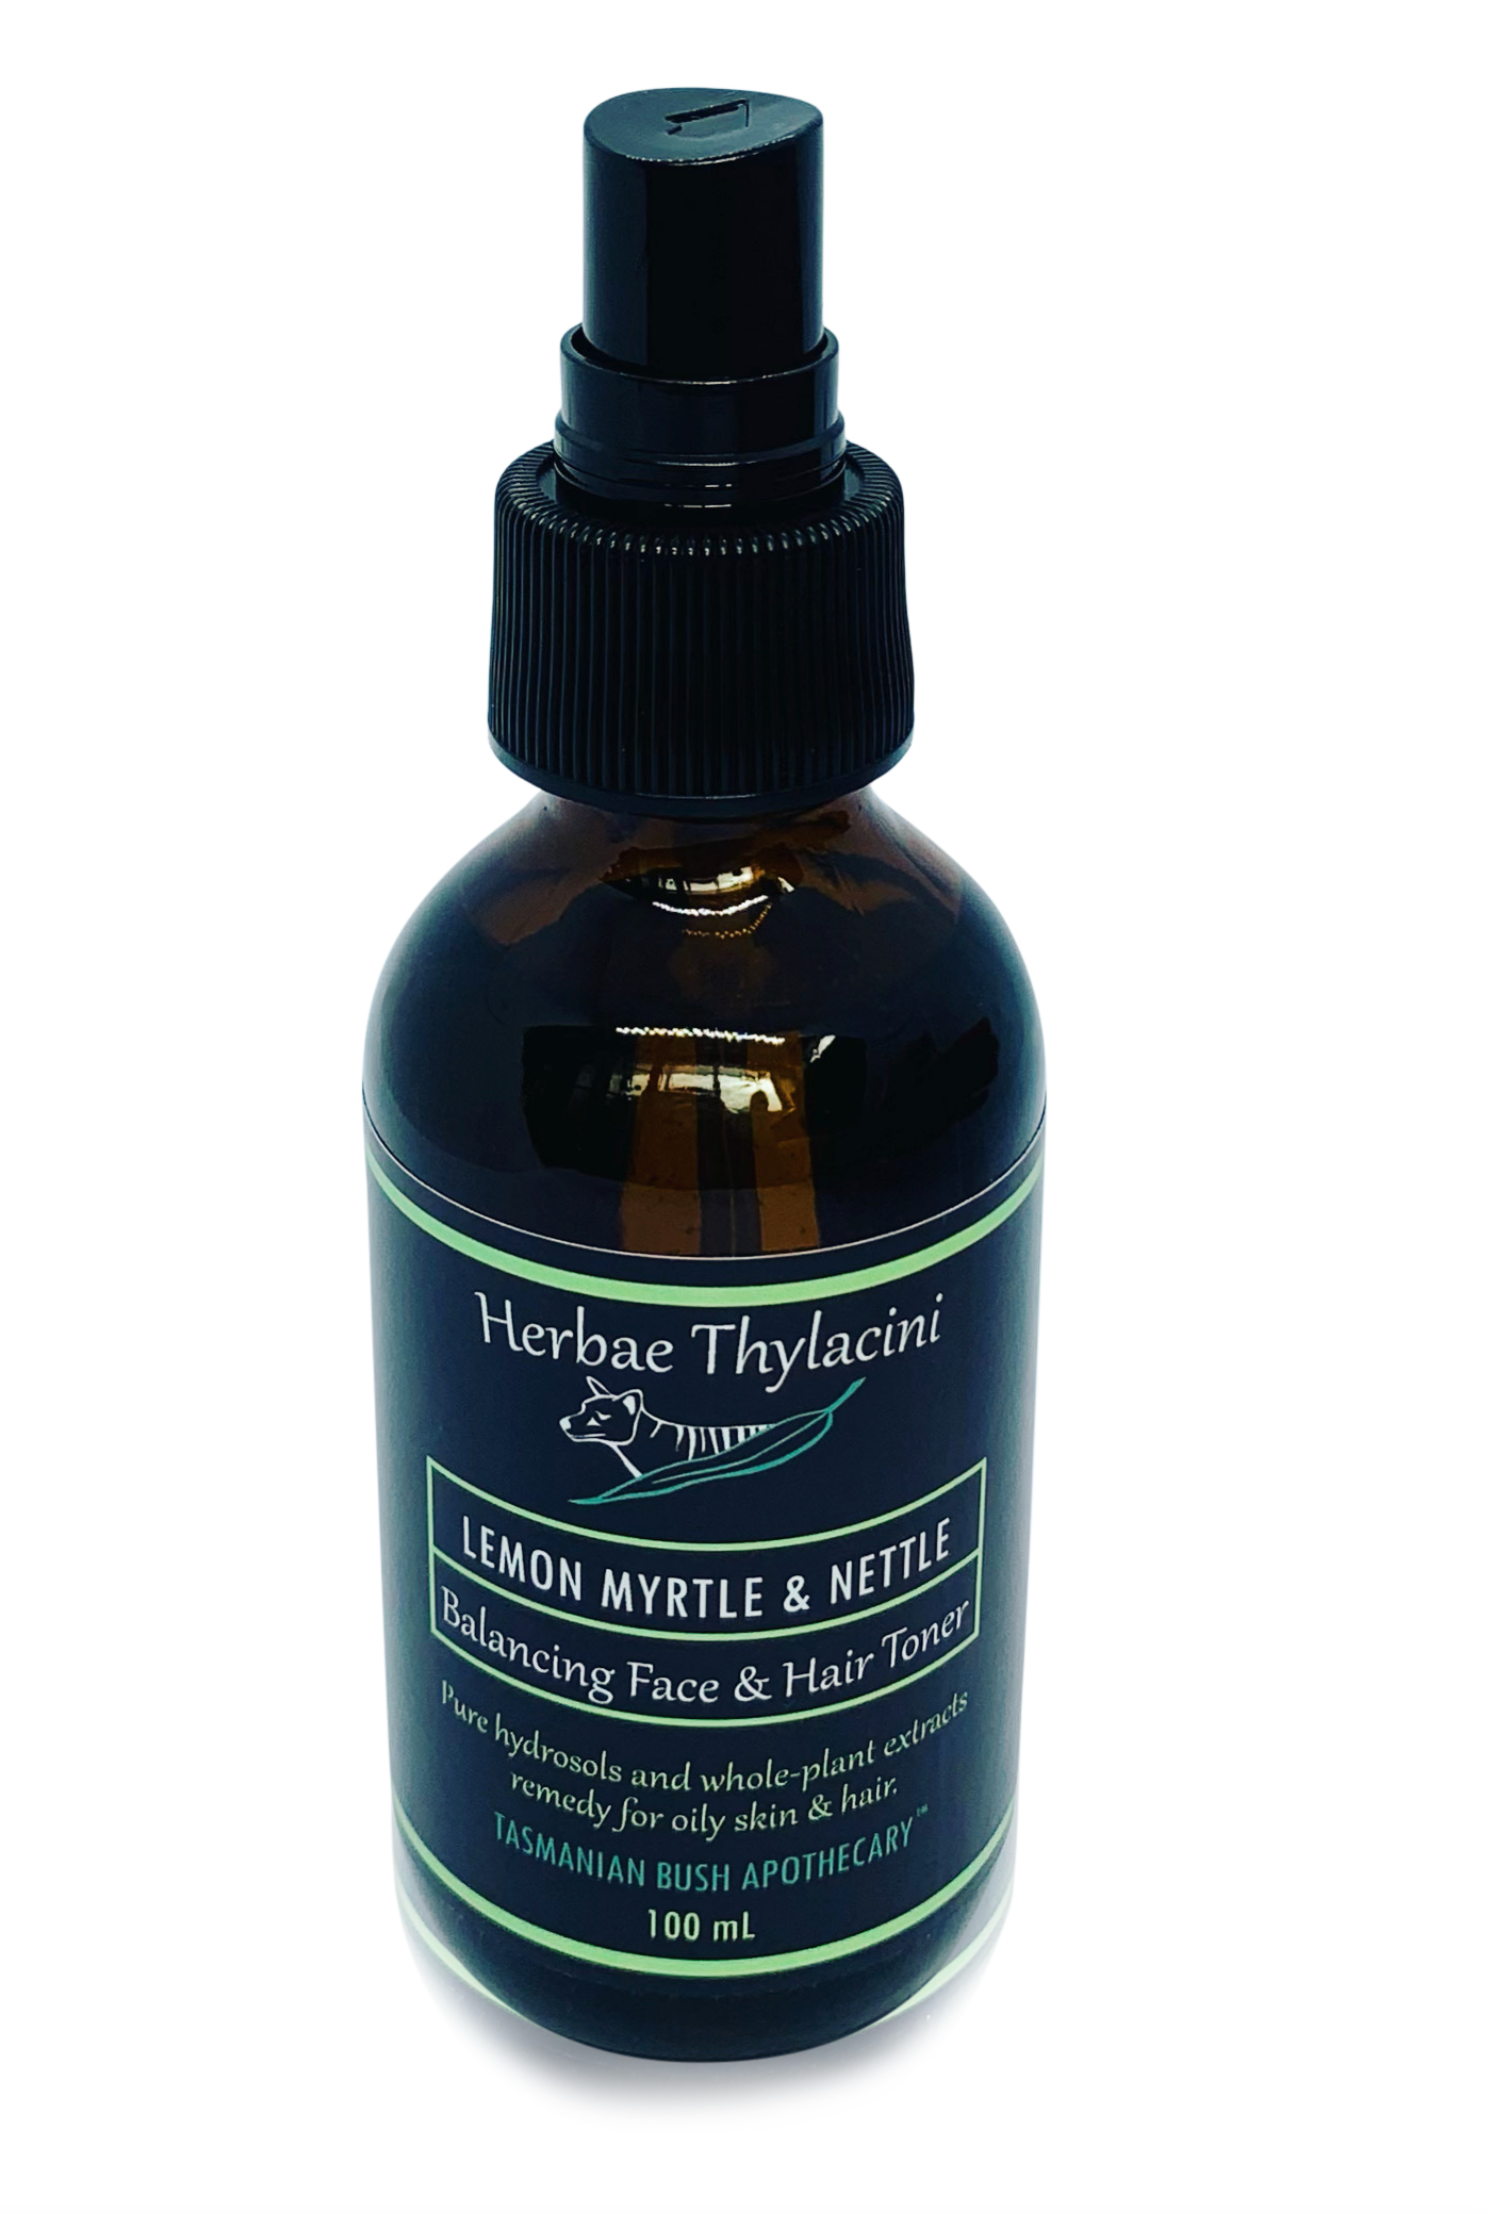 Herbae Thylacini - Lemon Myrtle & Nettle Face and Hair Toner –  islandhometasmania